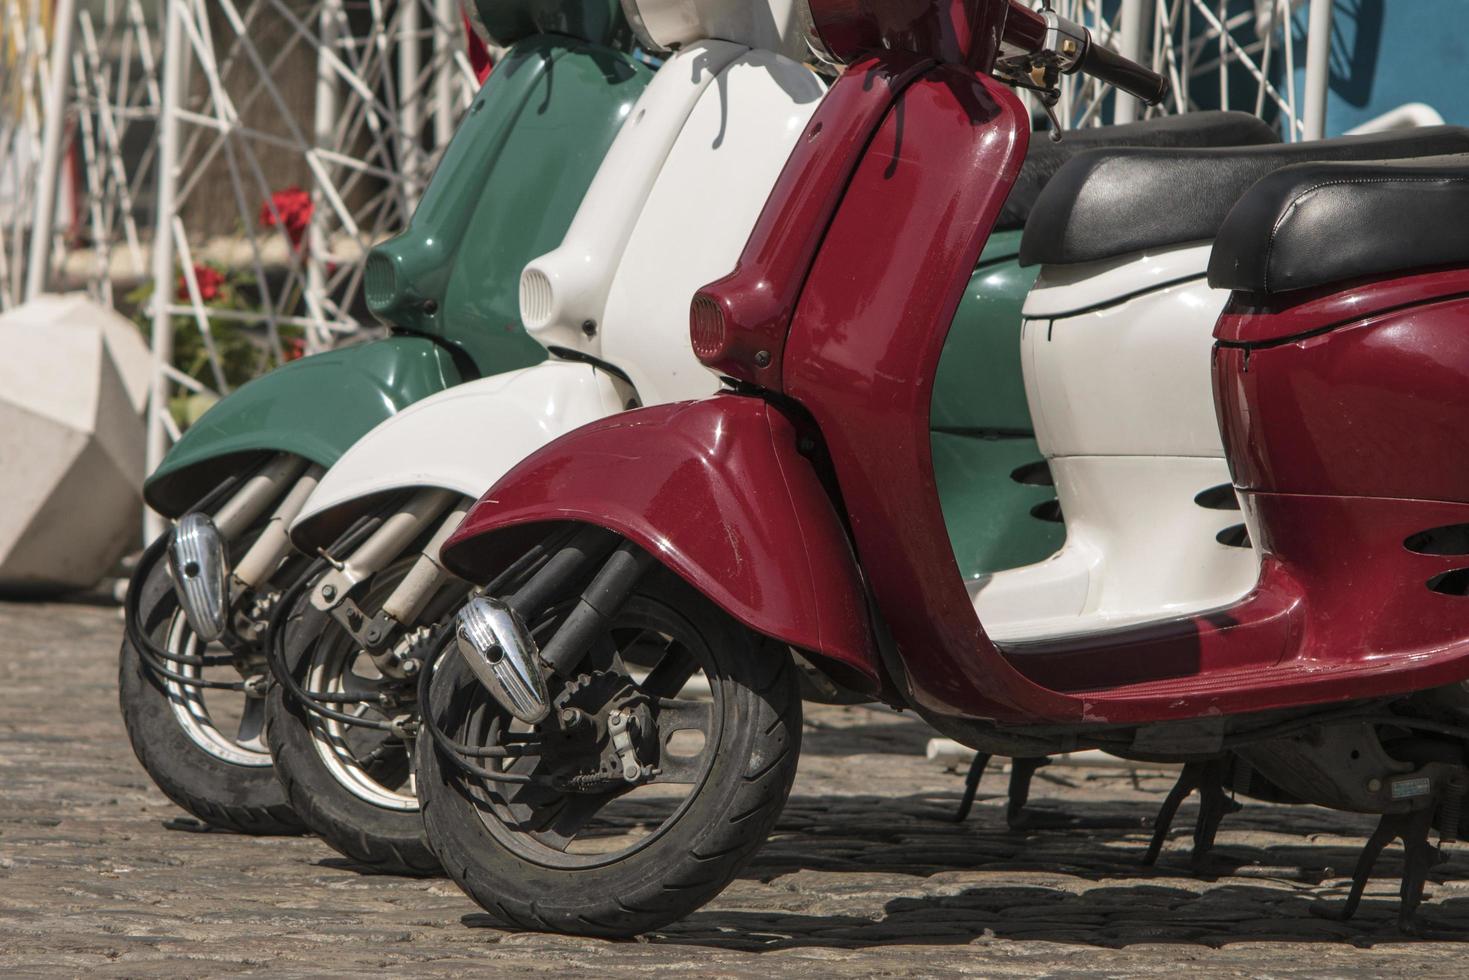 drei Mopeds lackiert in den Farben der italienischen Flagge foto